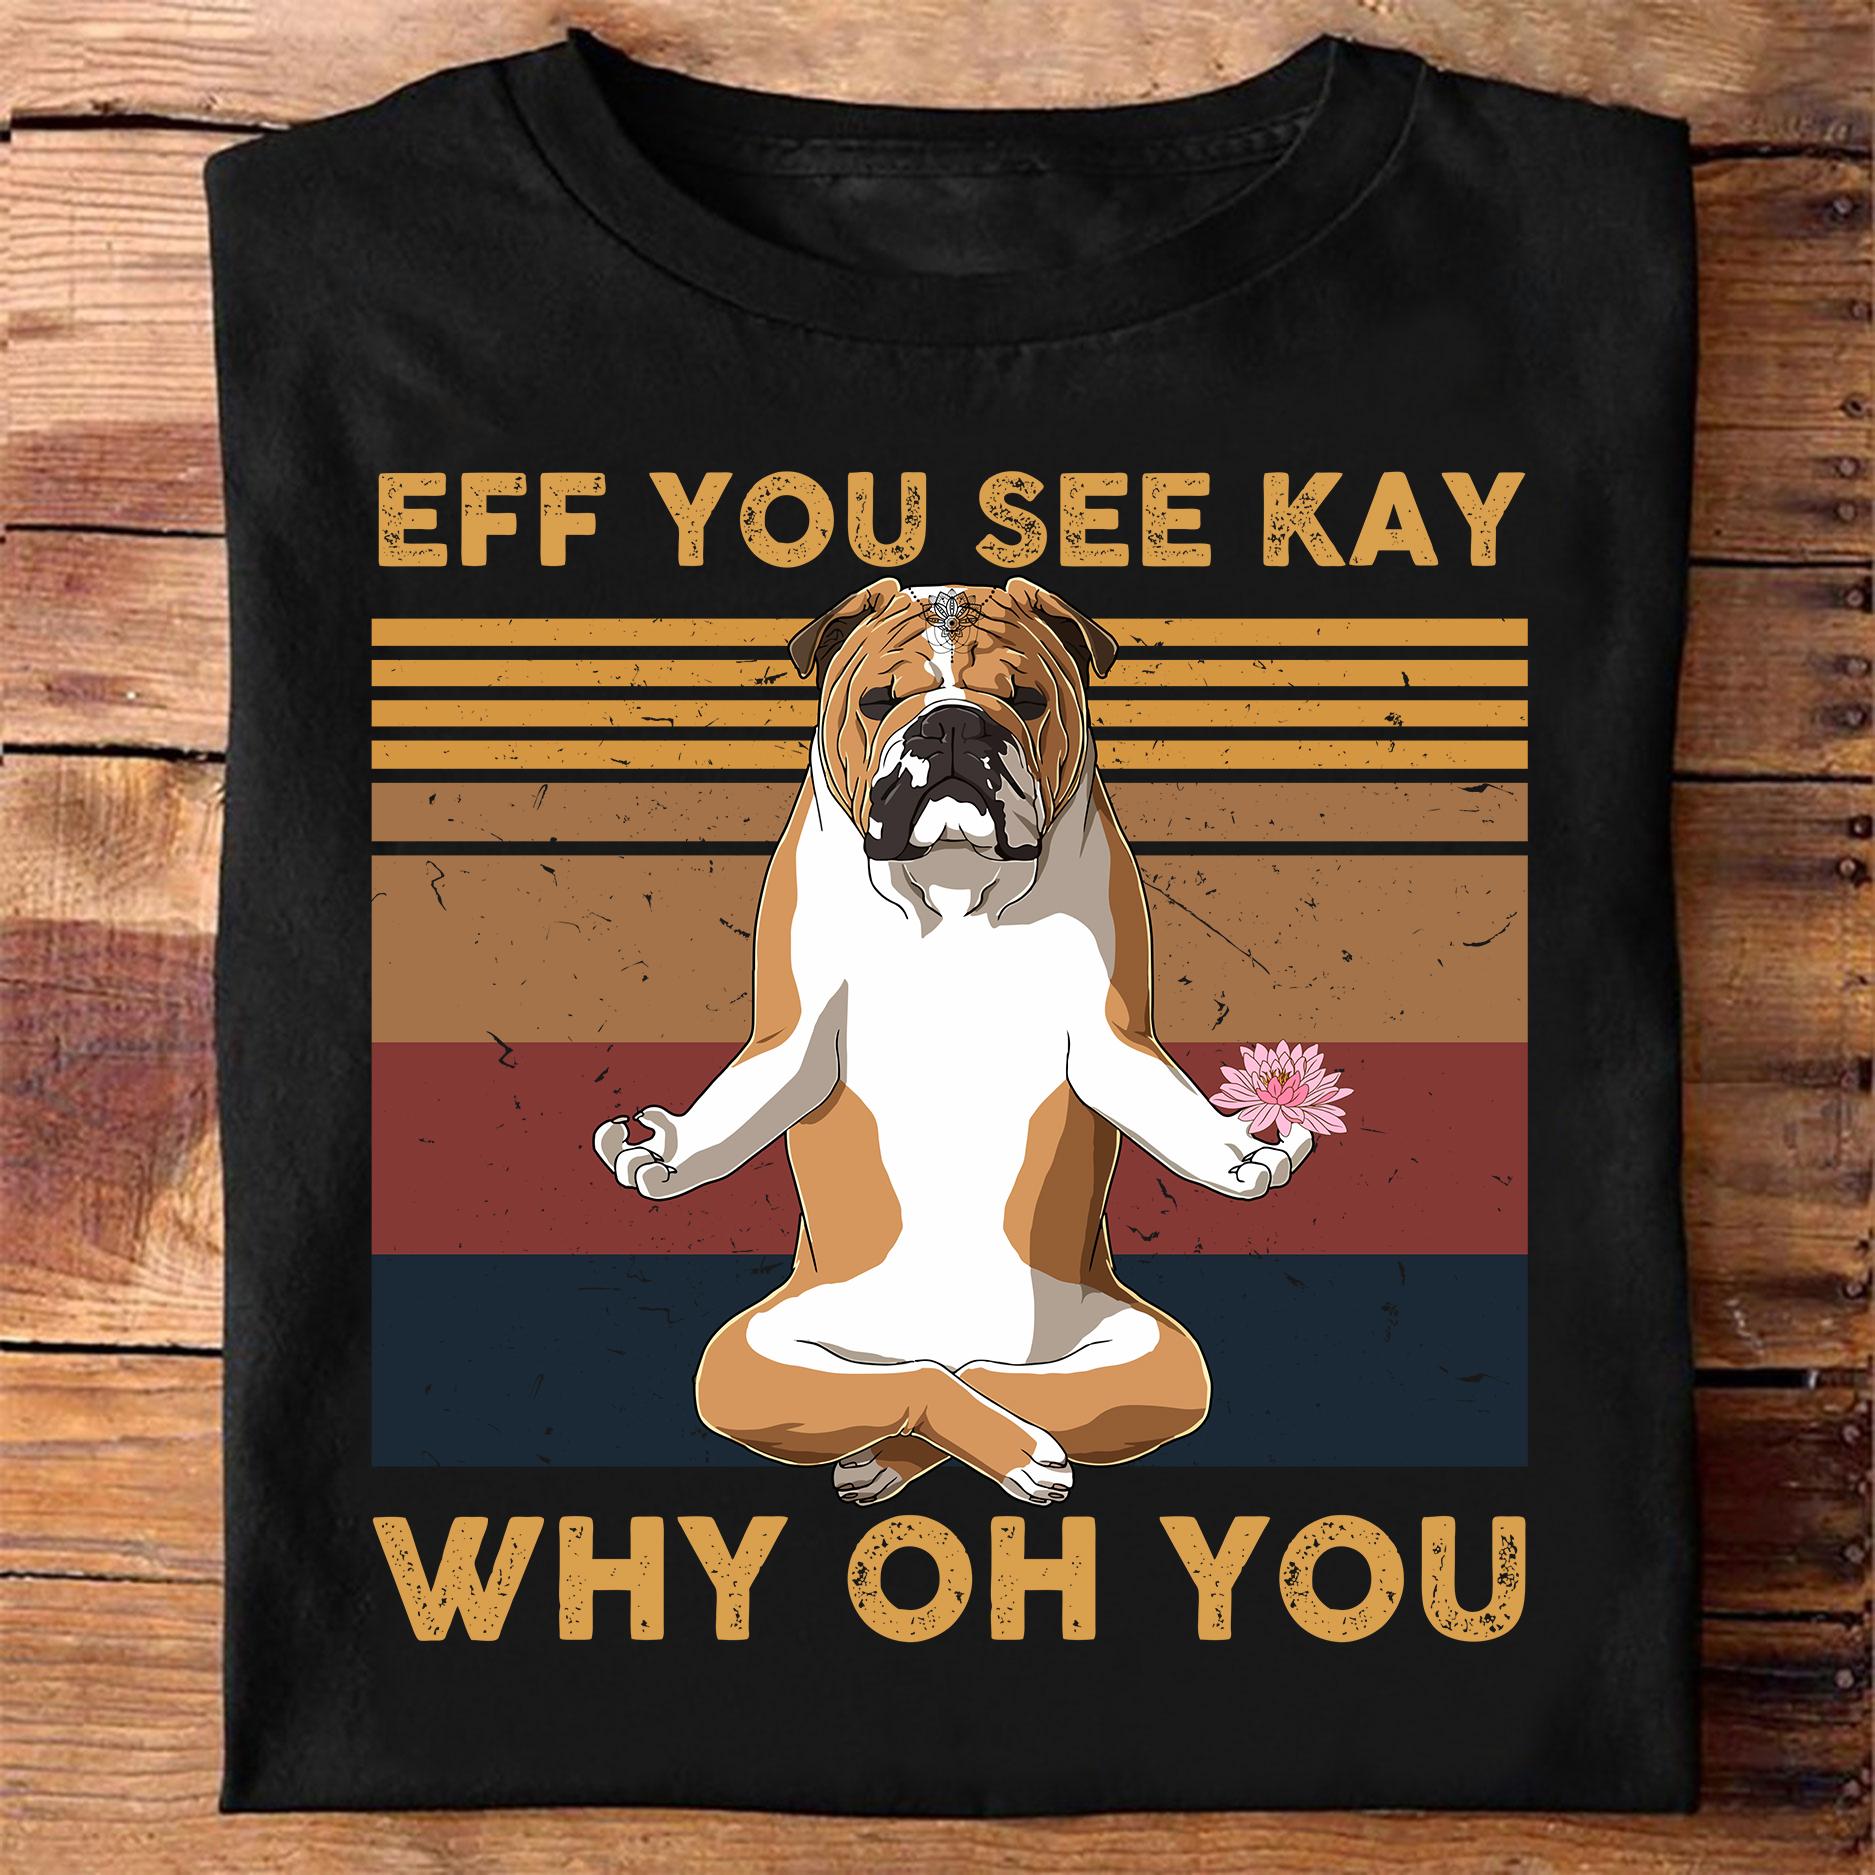 Bulldog Yoga - Eff you see kay why oh you